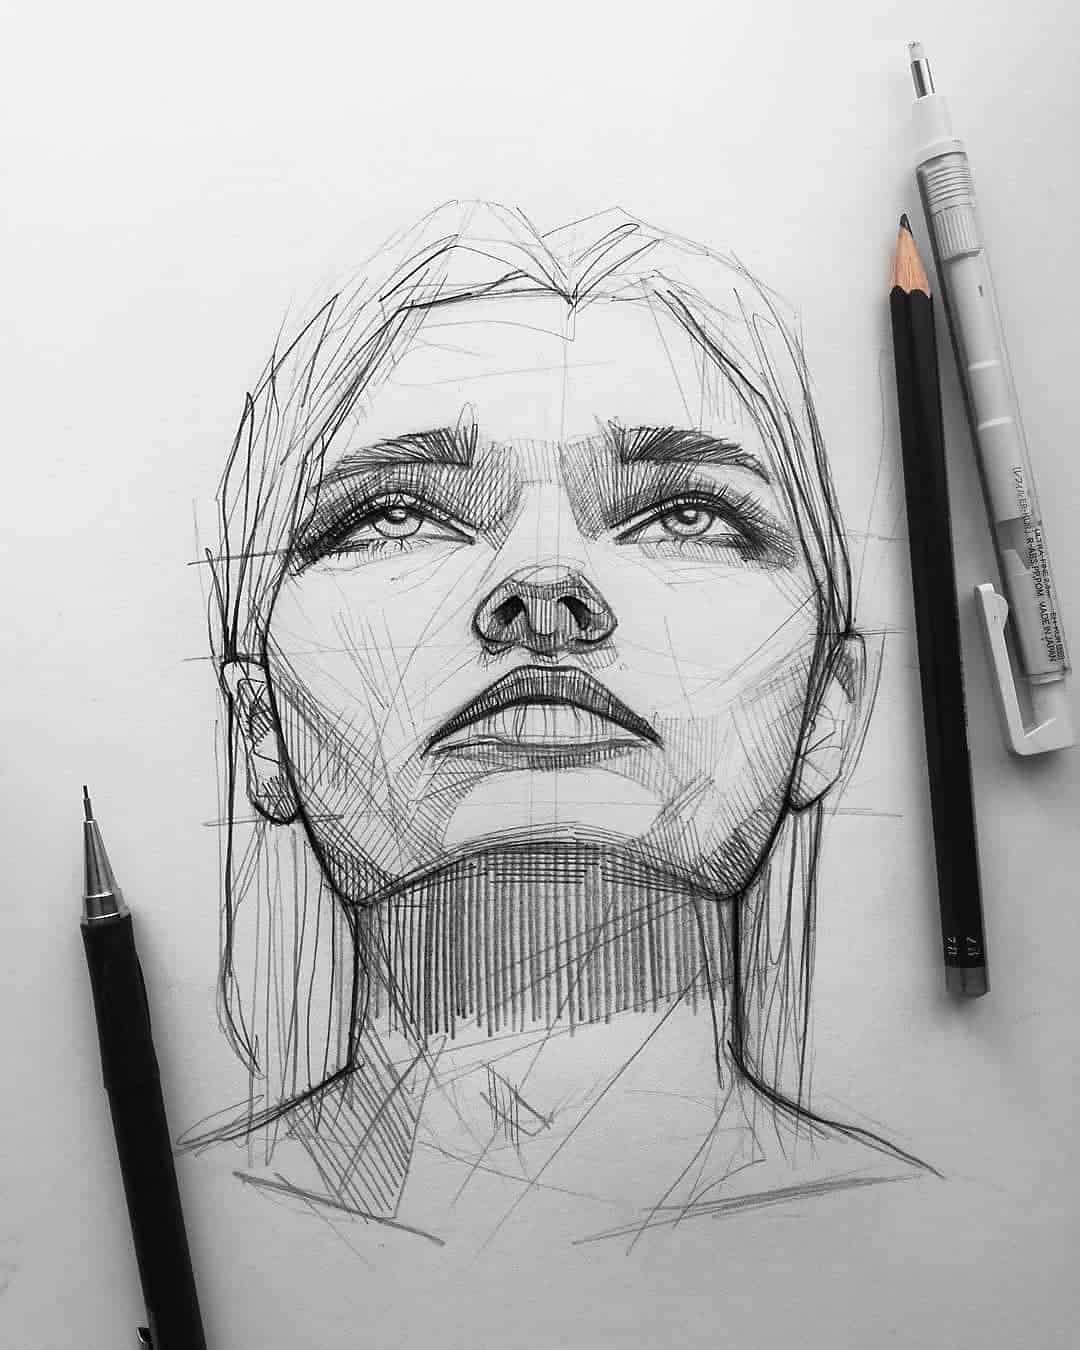 Pencil sketch artist Ani Cinski